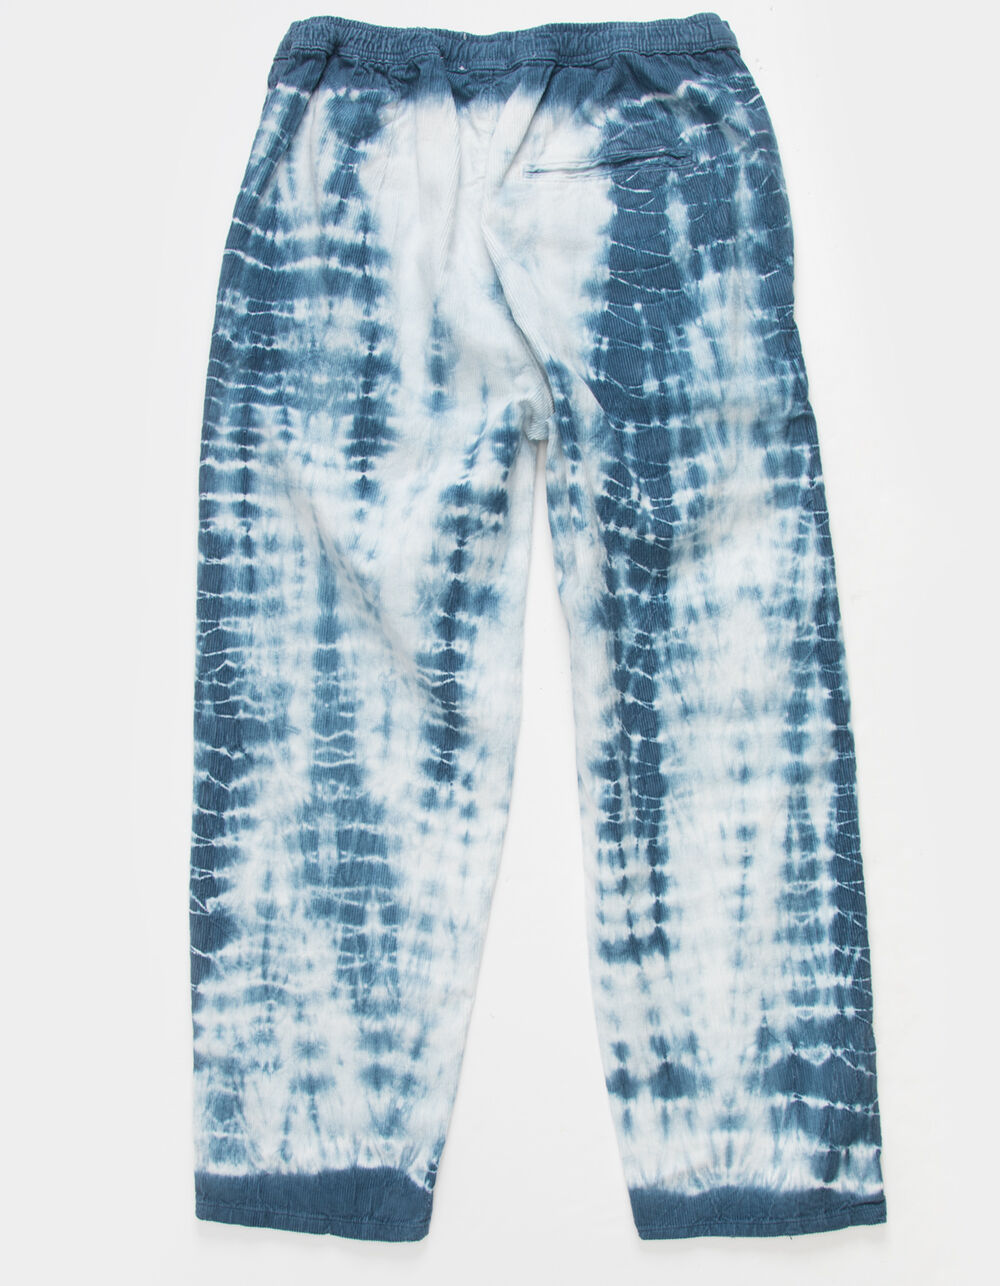 BDG Urban Outfitters PJ Mens Tie-Dye Pants - BLUE / WHITE | Tillys